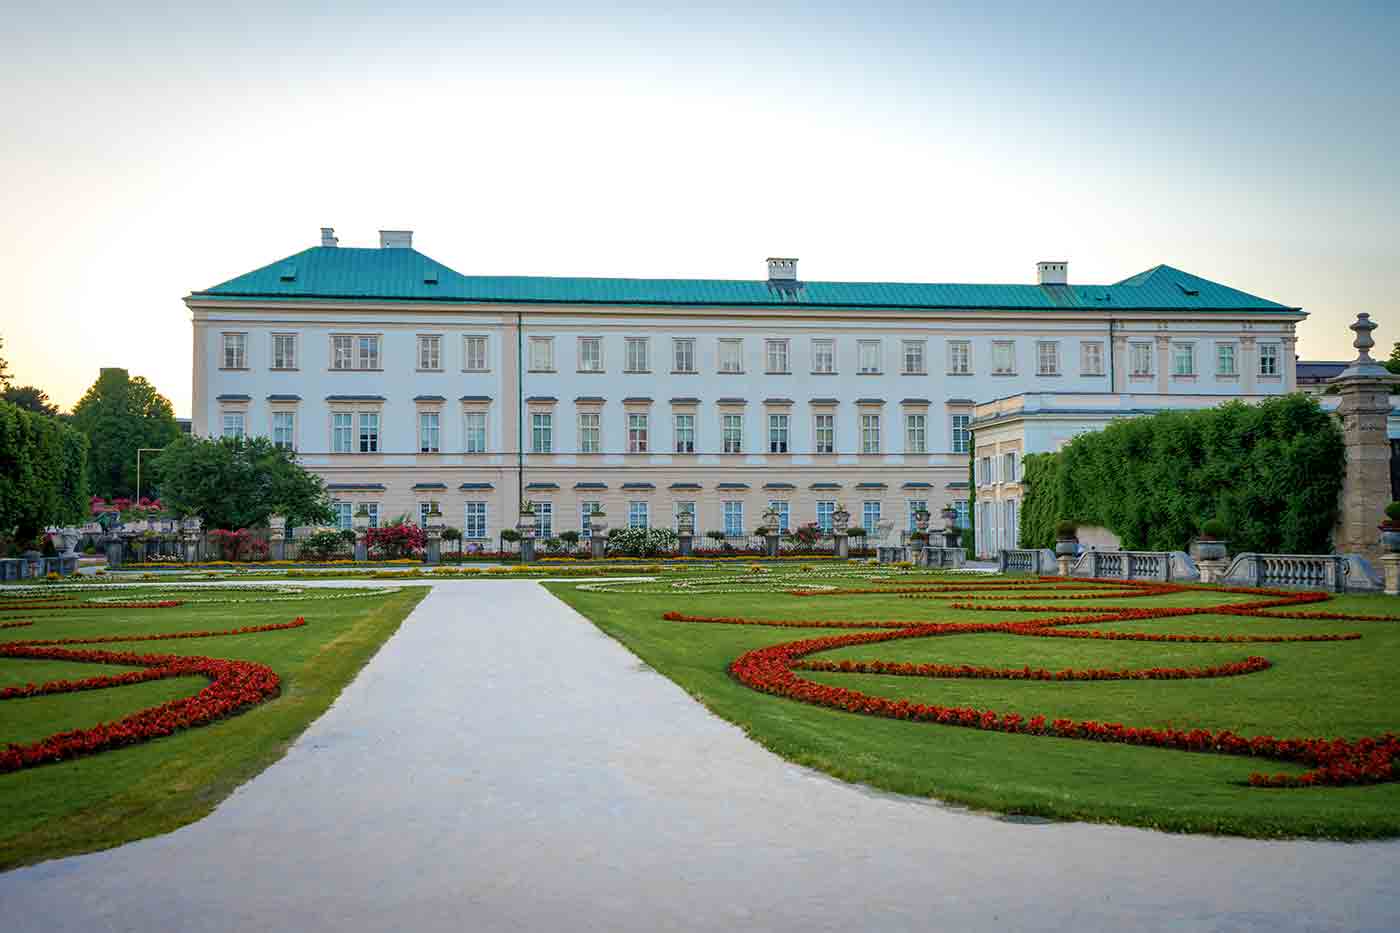 Mirabell Palace